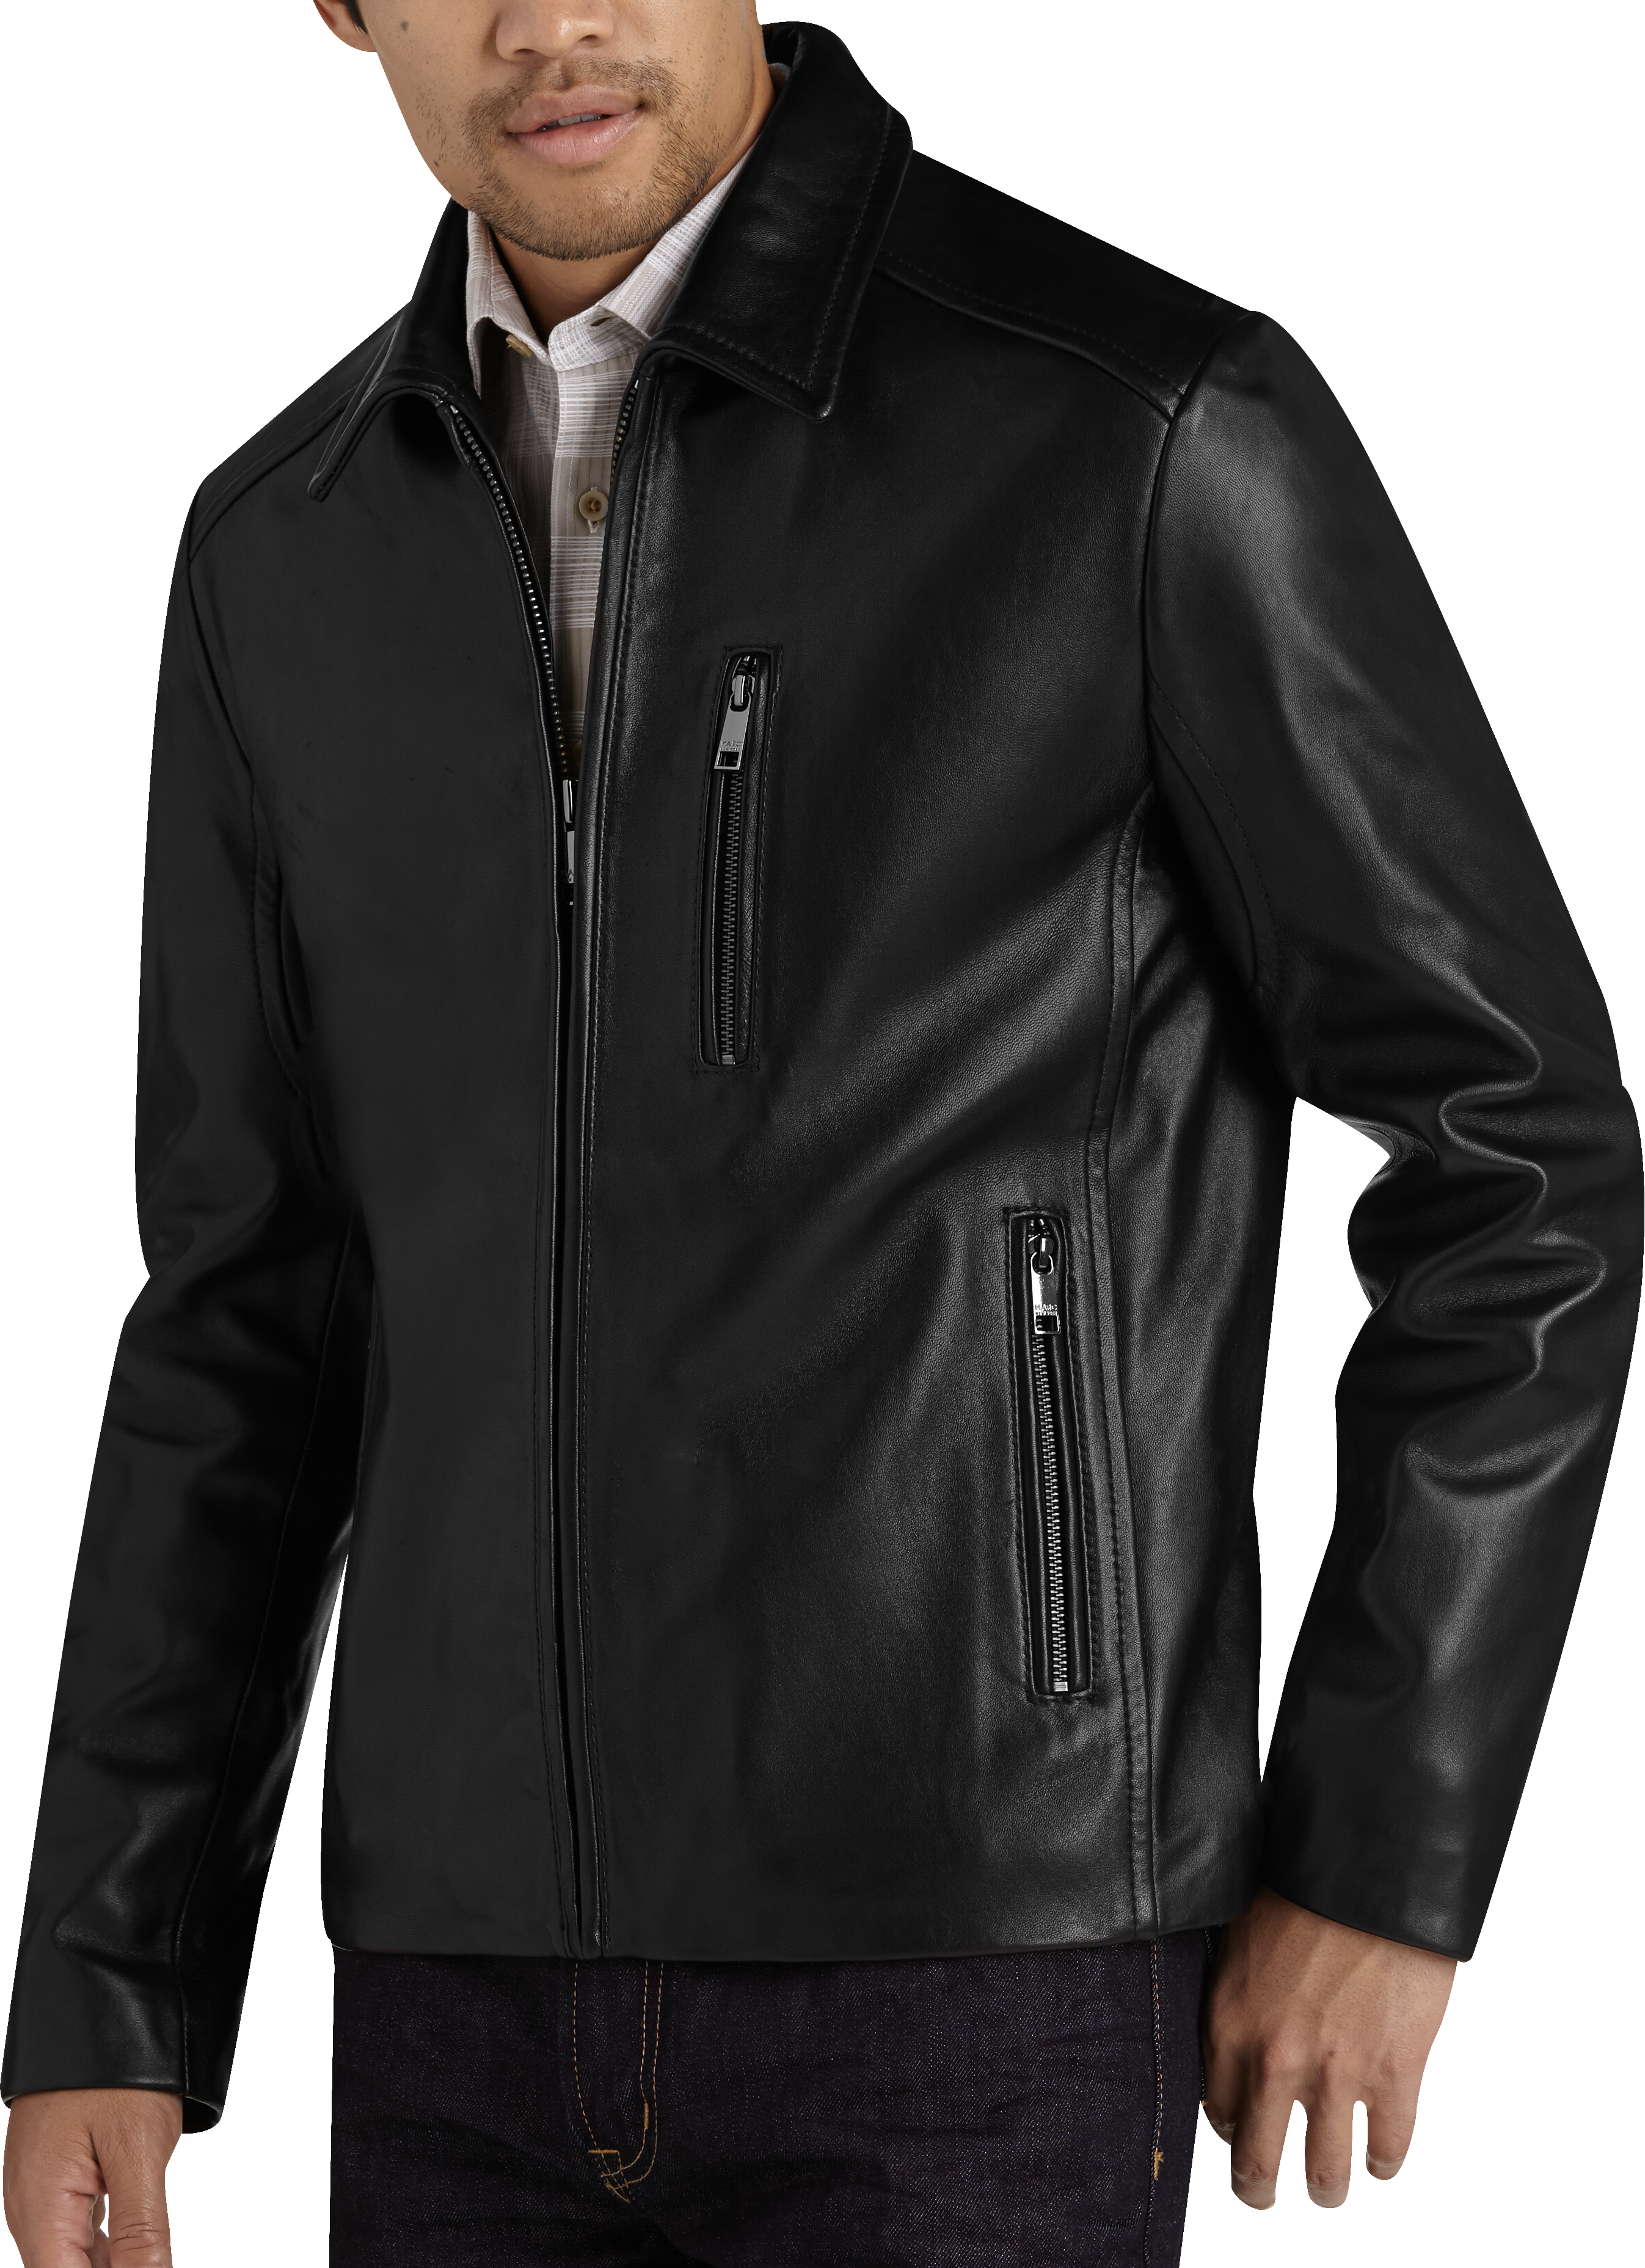 Marc New York Black Leather Classic Fit Bomber Jacket - Men's Sale ...